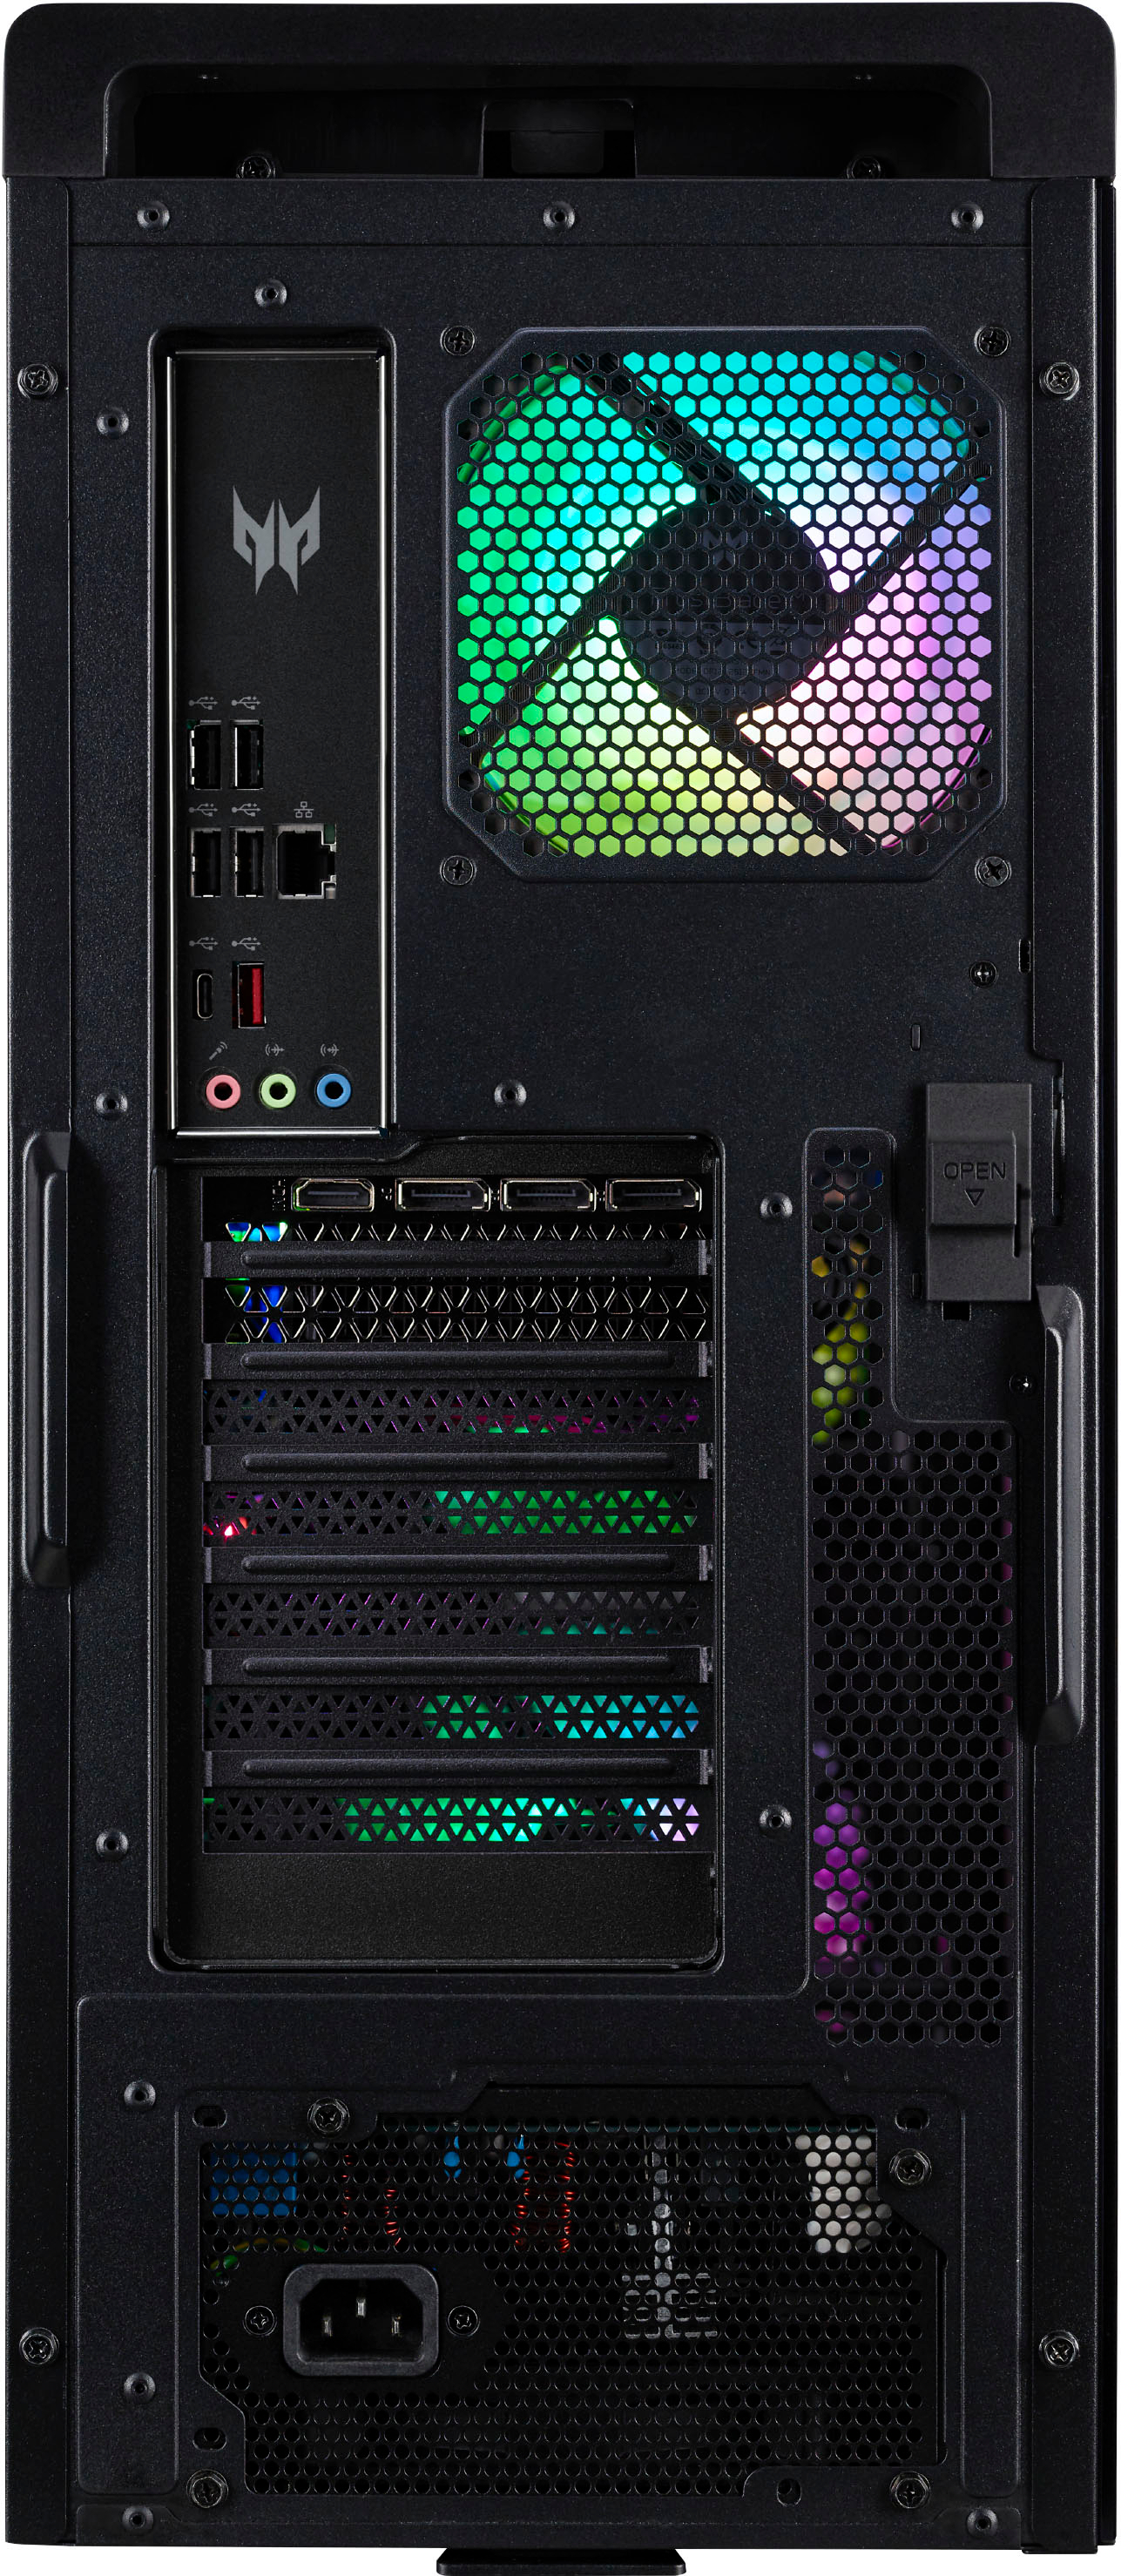 Back View: Acer - Predator Orion 5000 Gaming Desktop - Intel Core i7-12700F - 16GB DDR5 Memory - NVIDIA GeForce RTX 3070 - 1TB Gen 4 SSD